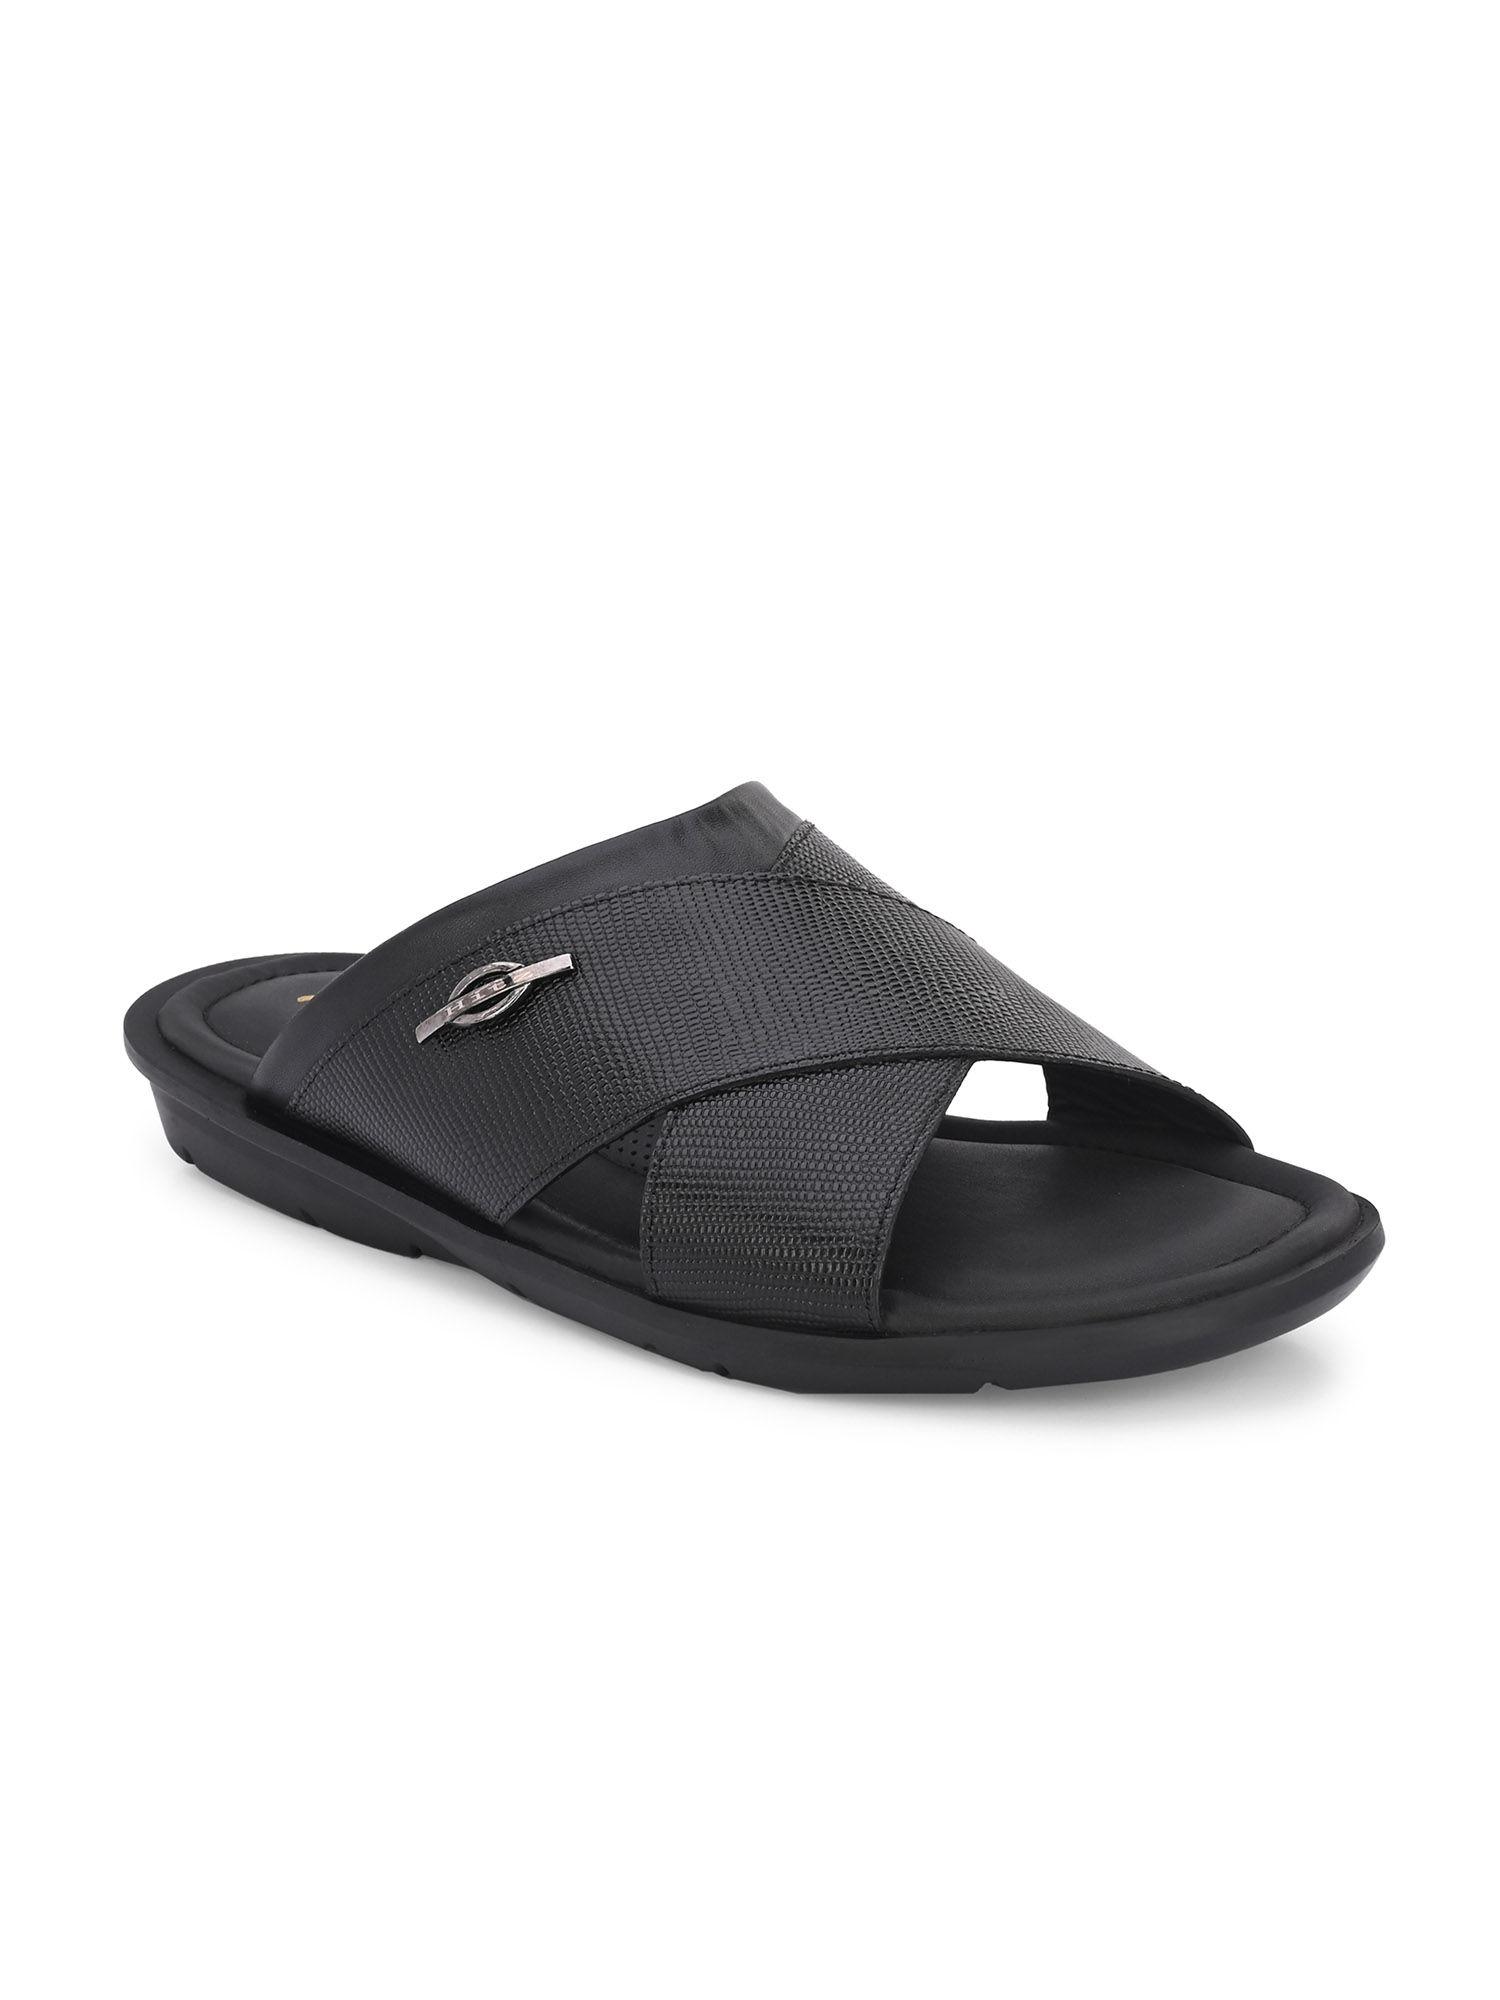 men's black leather open toe slippers